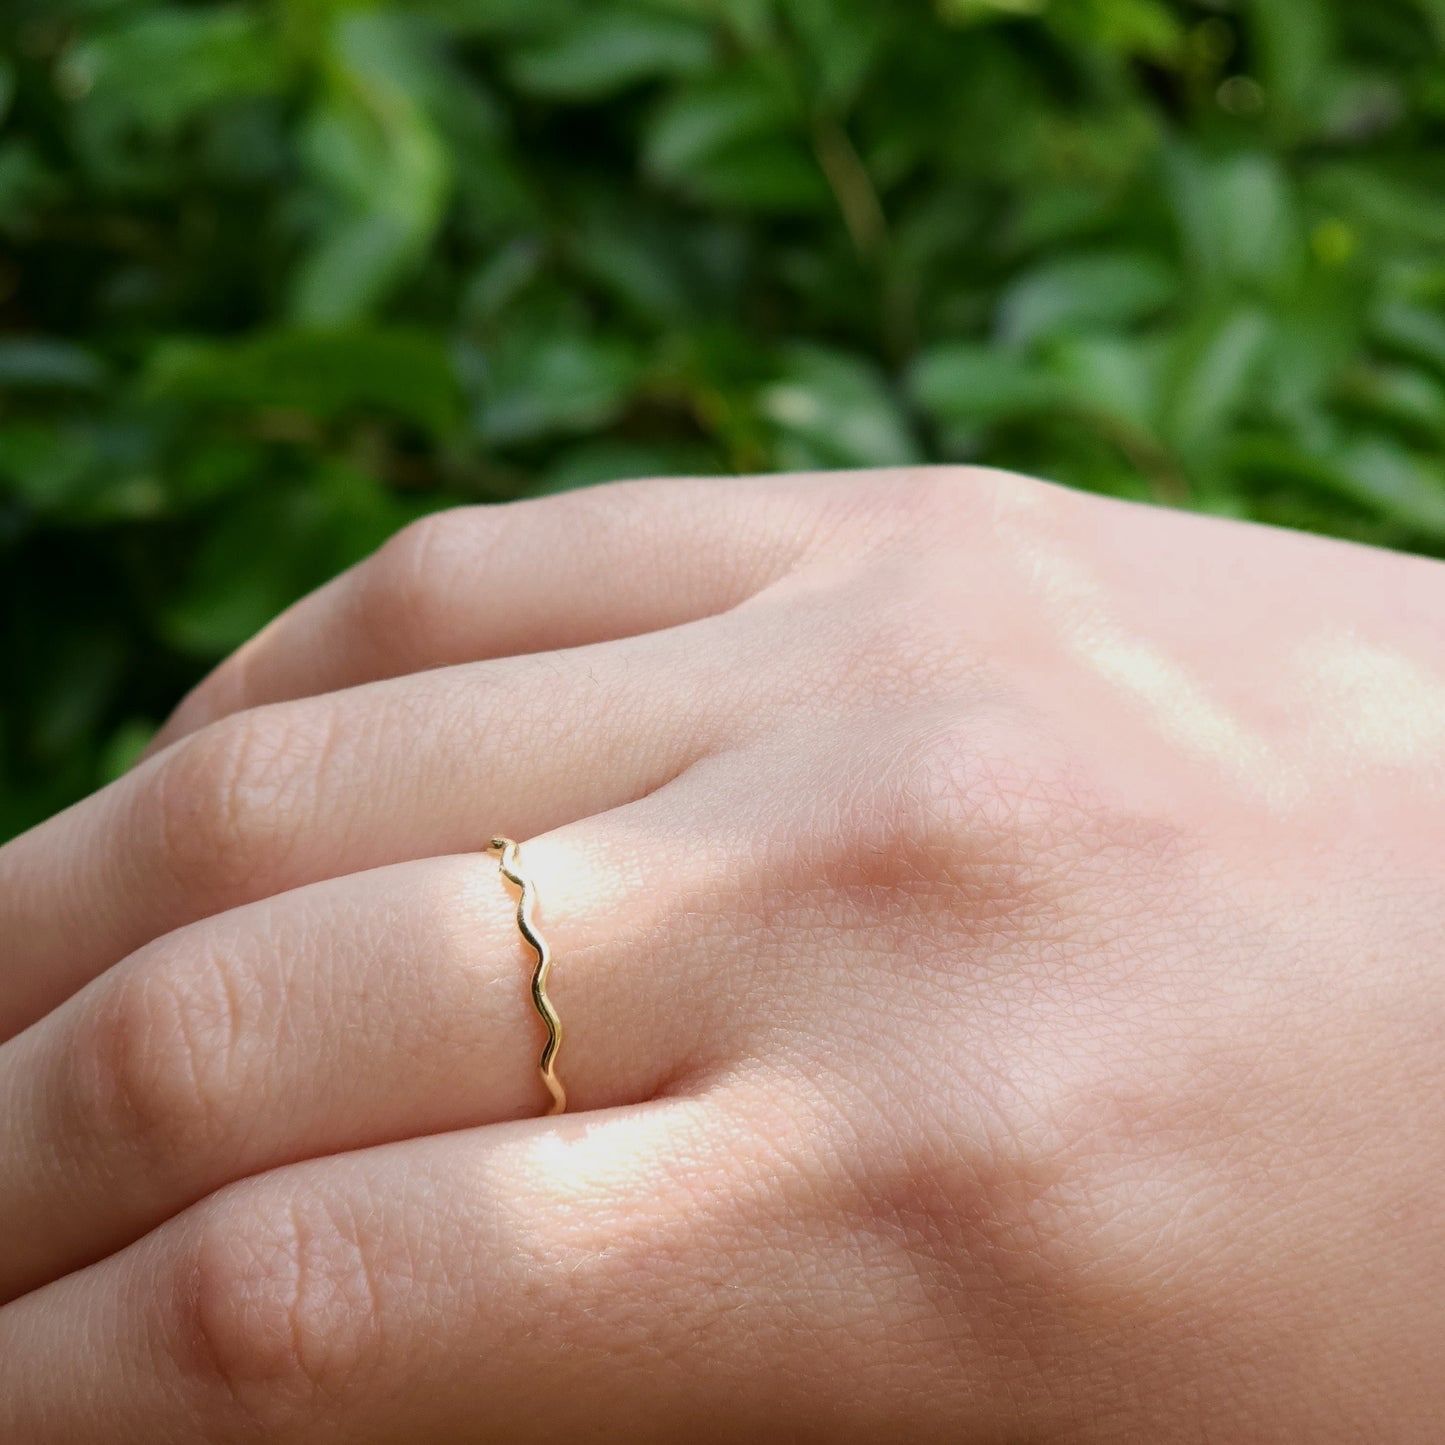 Wavy gold ring, 9 carat gold, Handmade in Australia